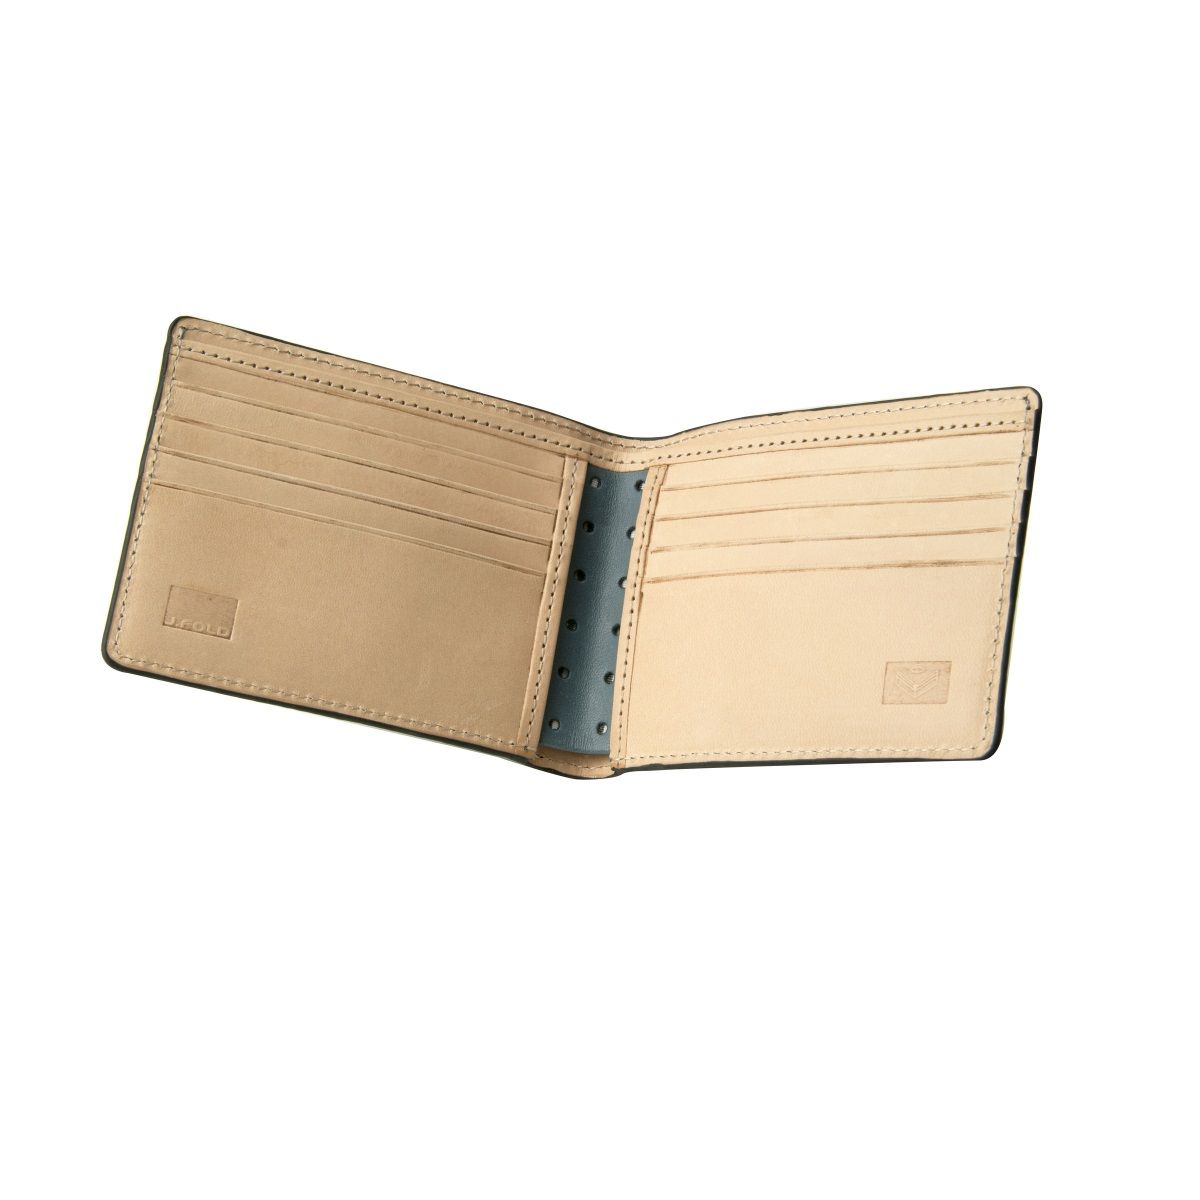 J.FOLD Thunderbird Leather Wallet - Slate